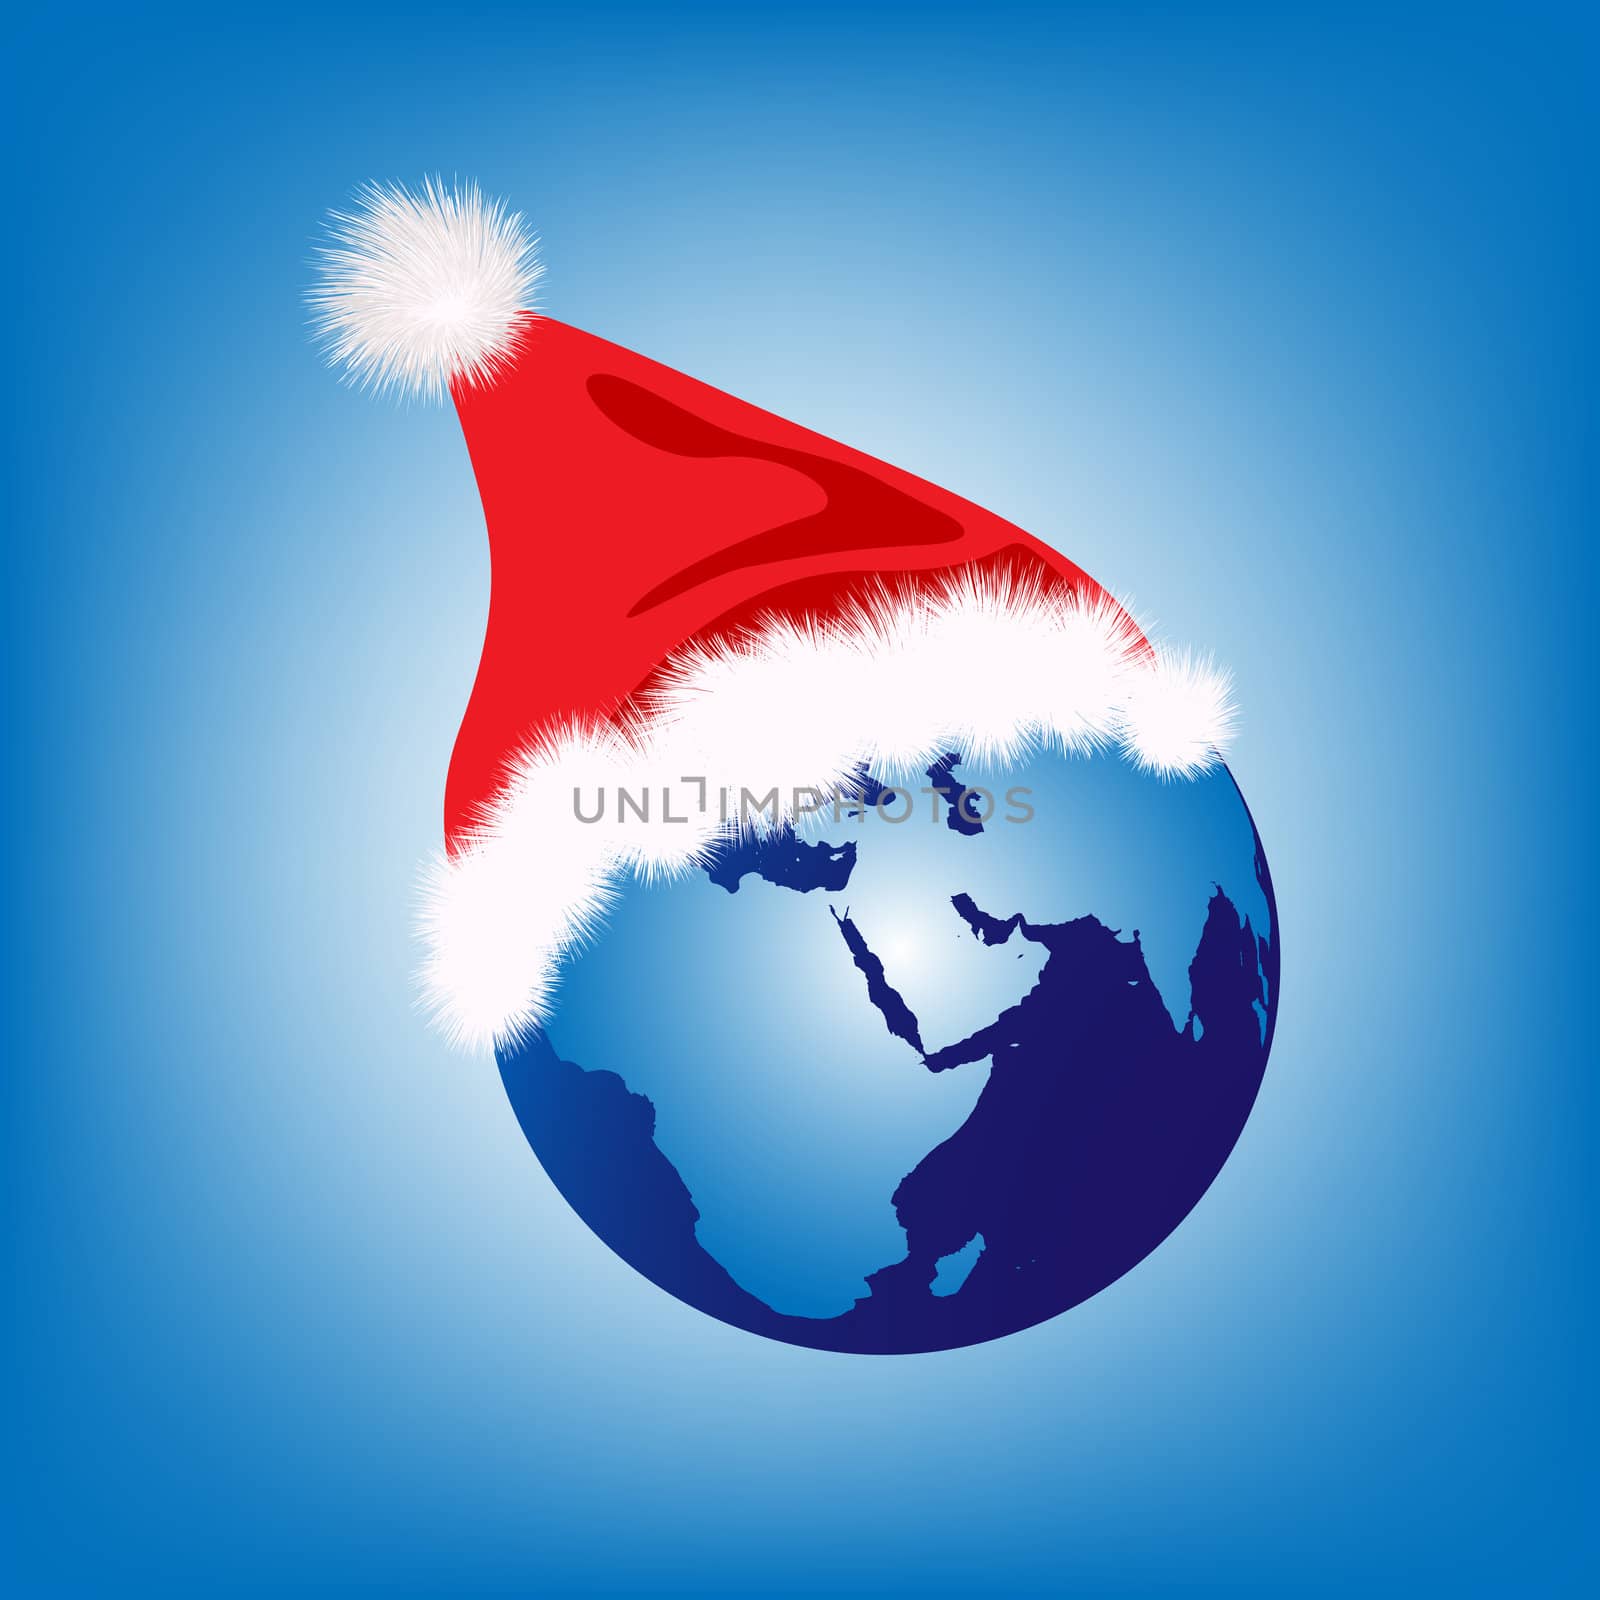 Santa hat on globe by Lirch